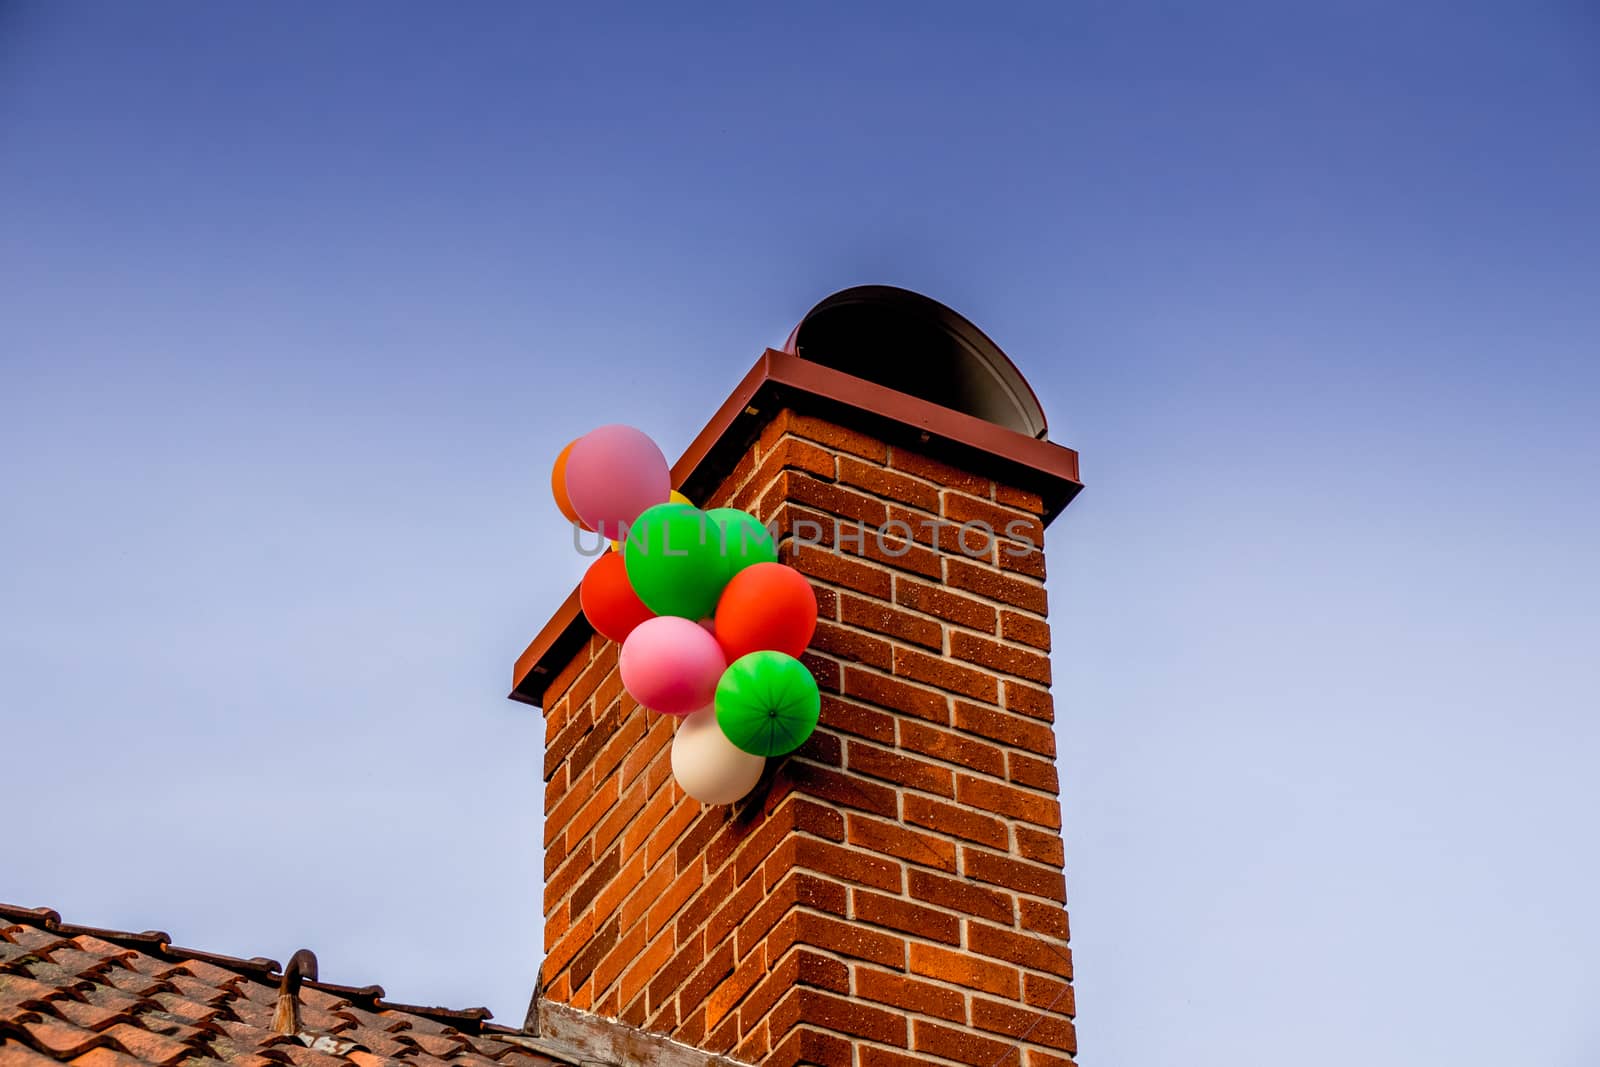 Ballons that got stuck on a chimney